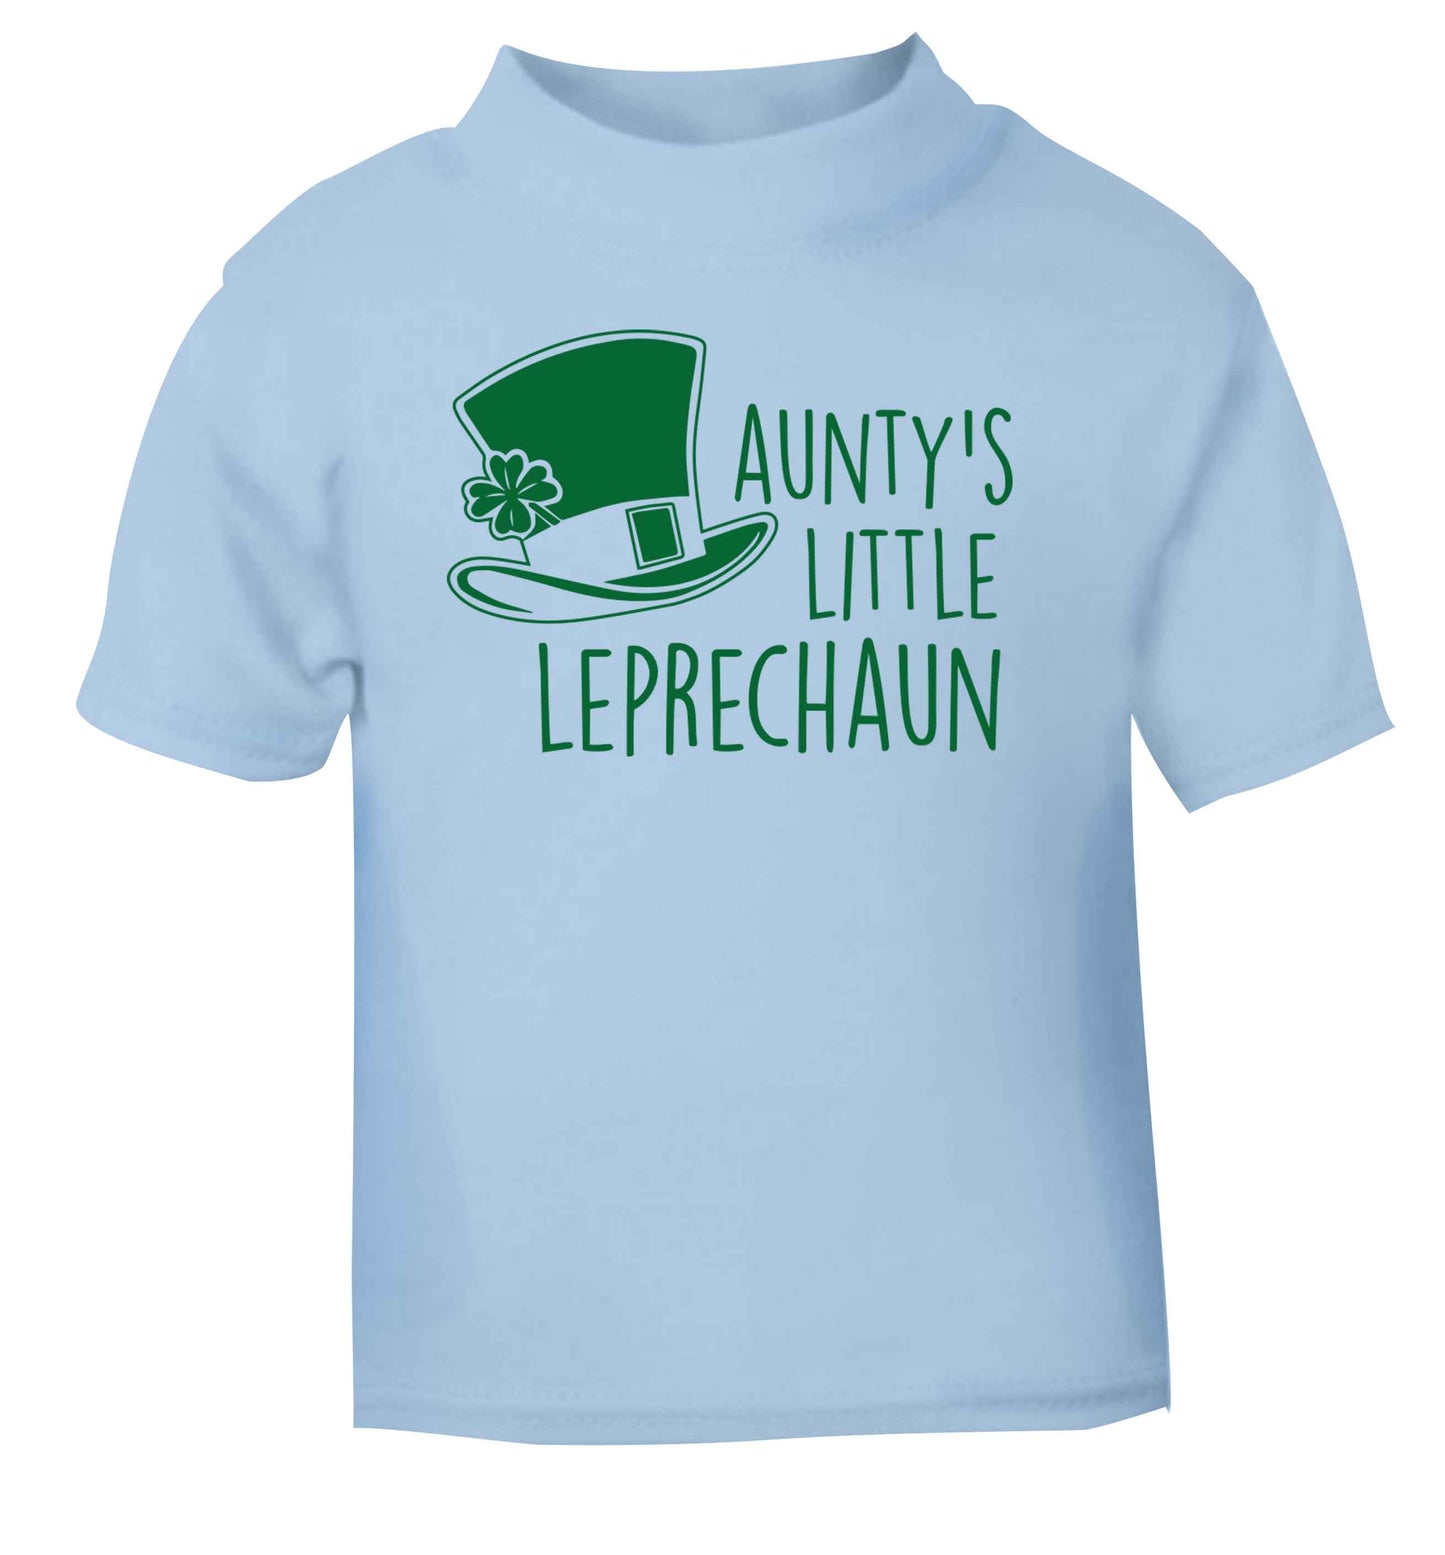 Aunty's little leprechaun light blue baby toddler Tshirt 2 Years